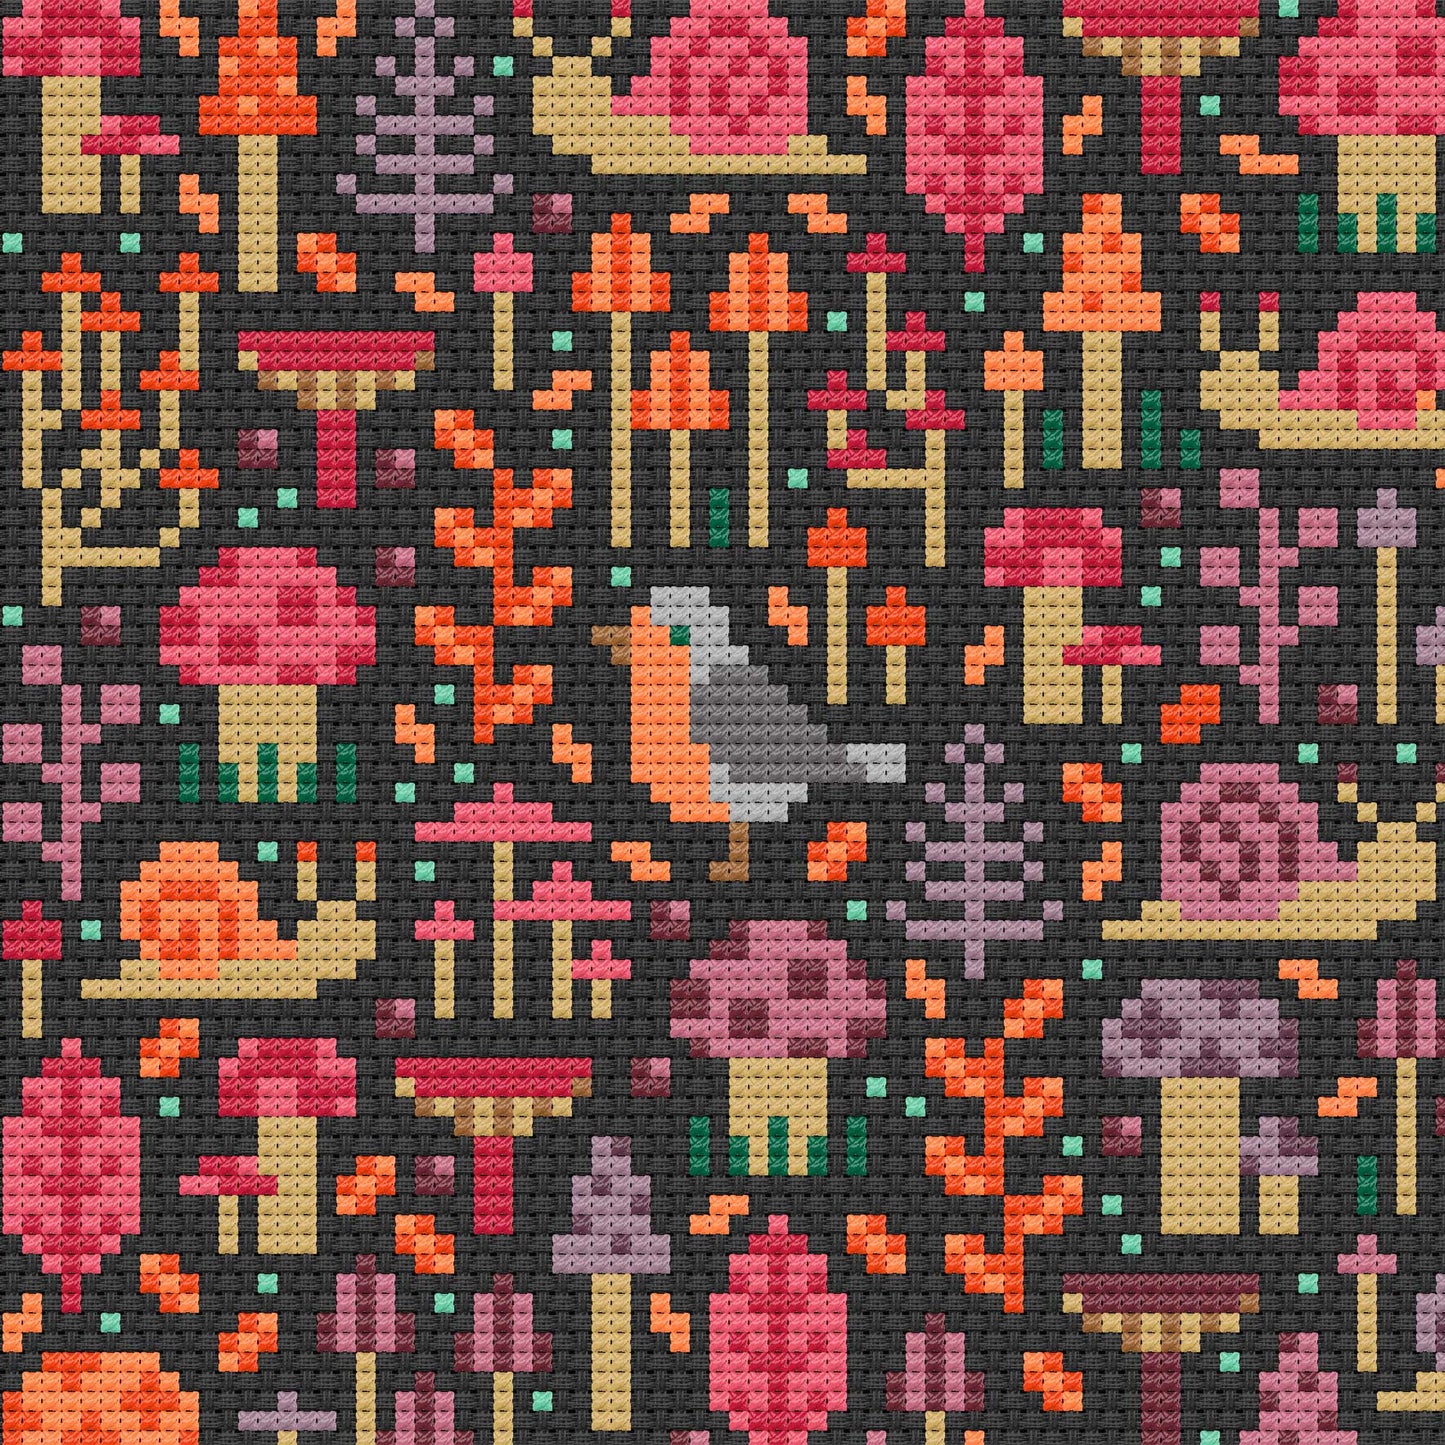 Fungi Garden - Cross Stitch Kit